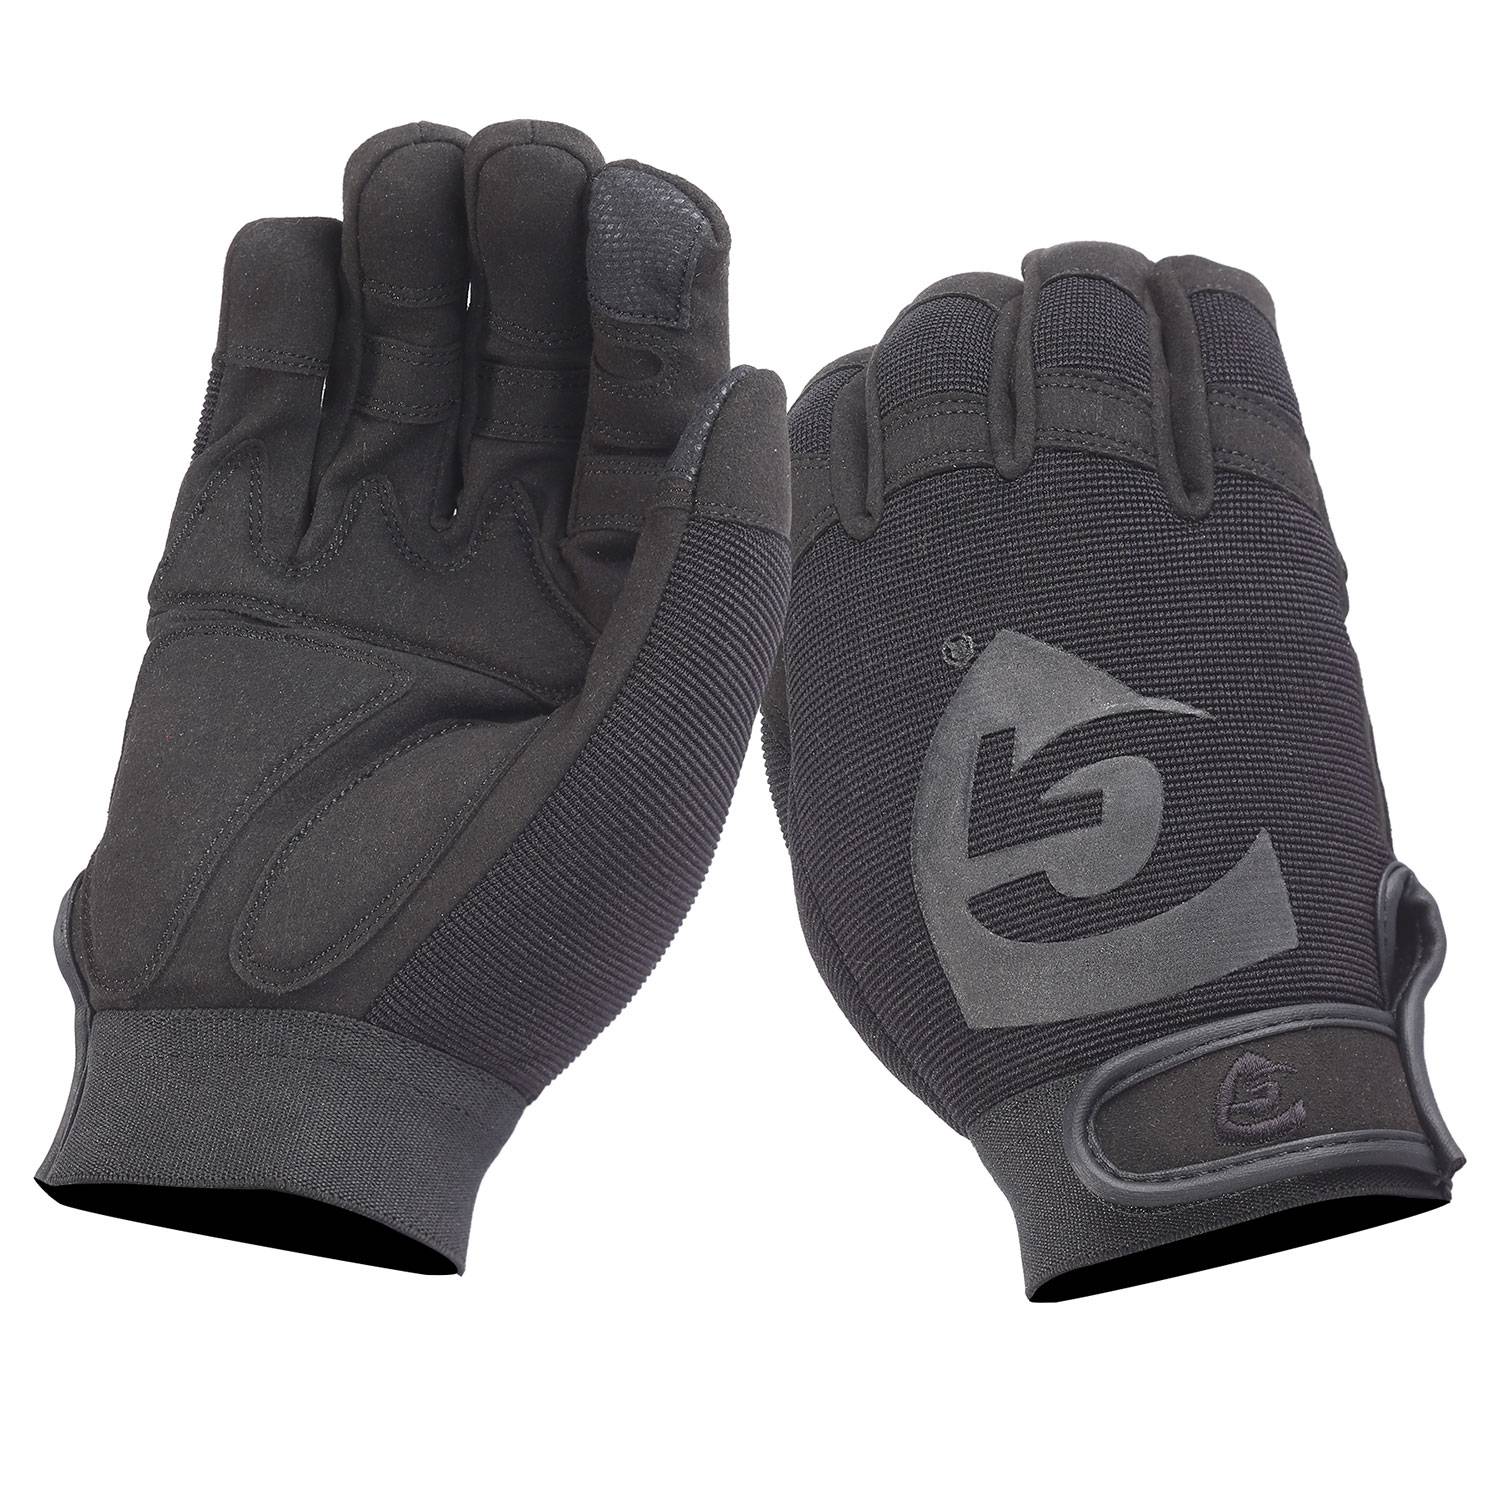 Galls Mechanics Gloves	